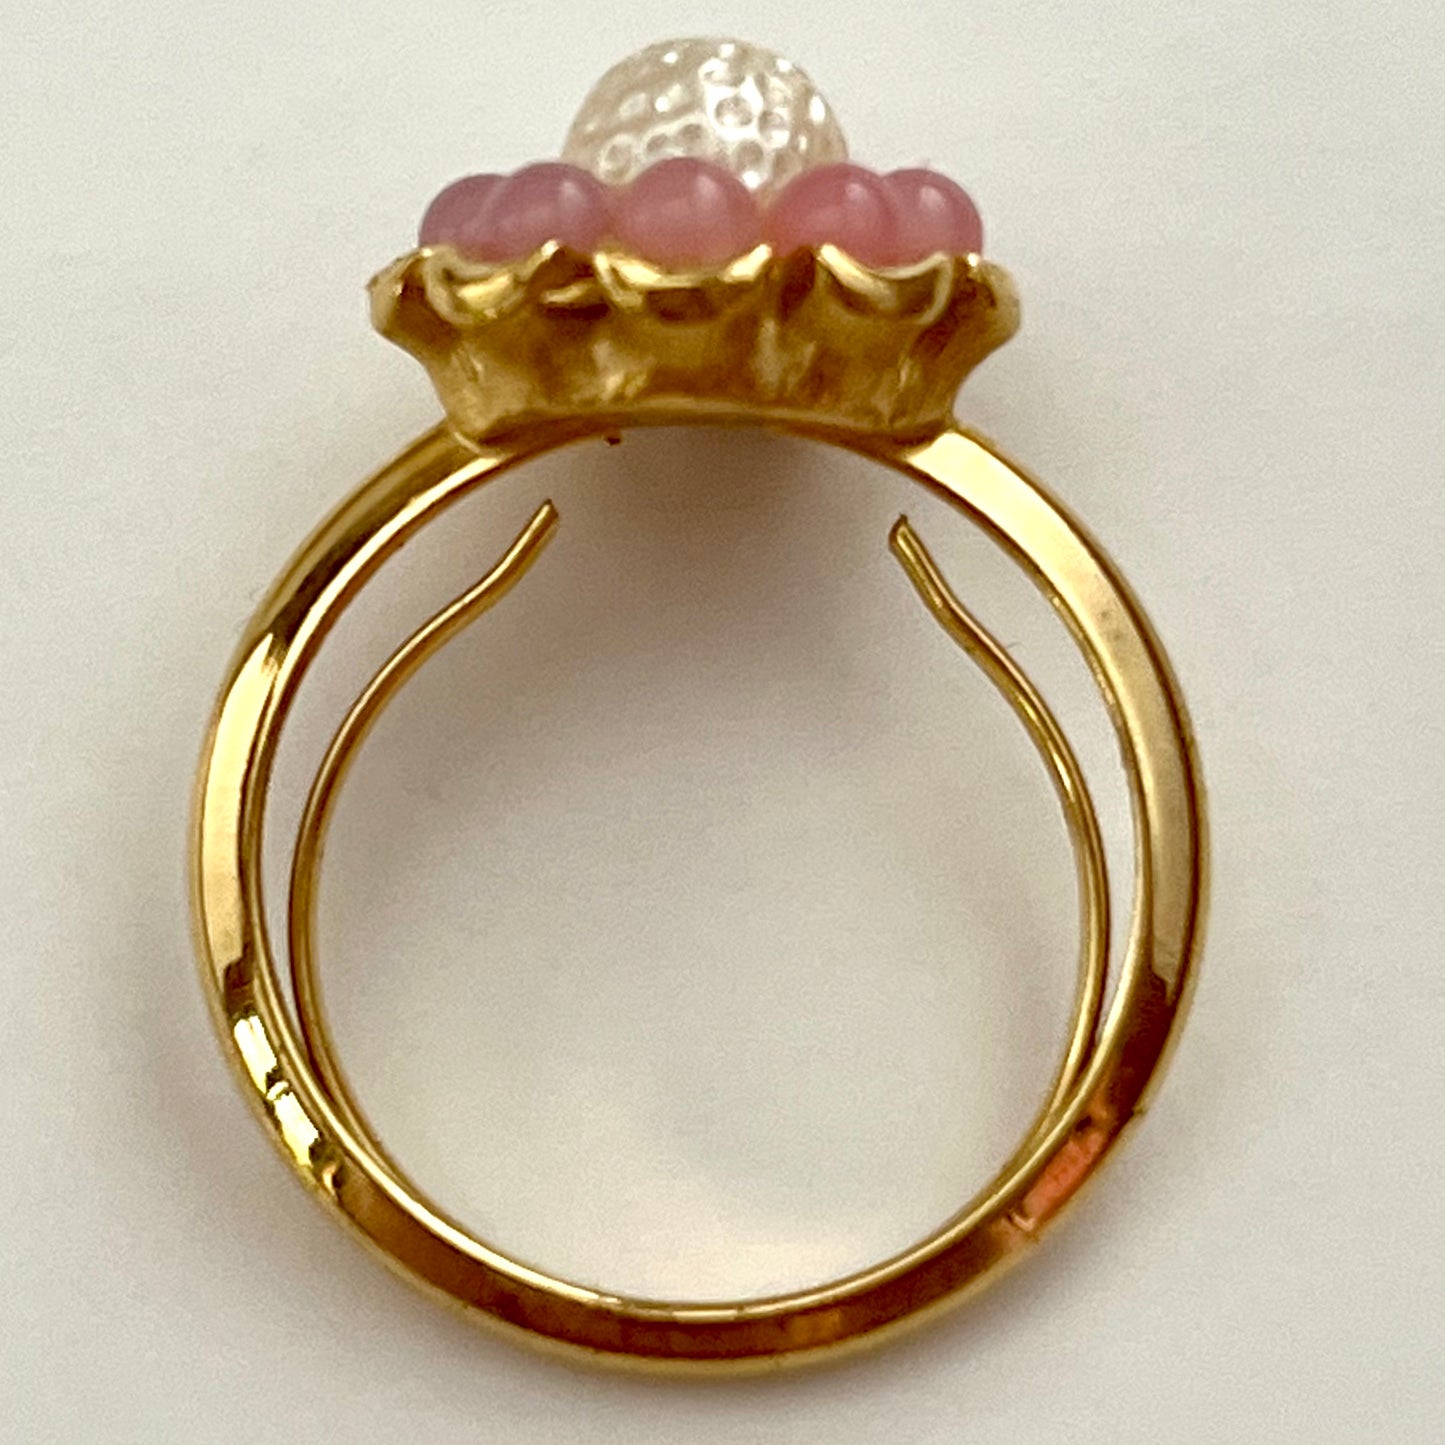 1973 Avon Moonlustre Ring